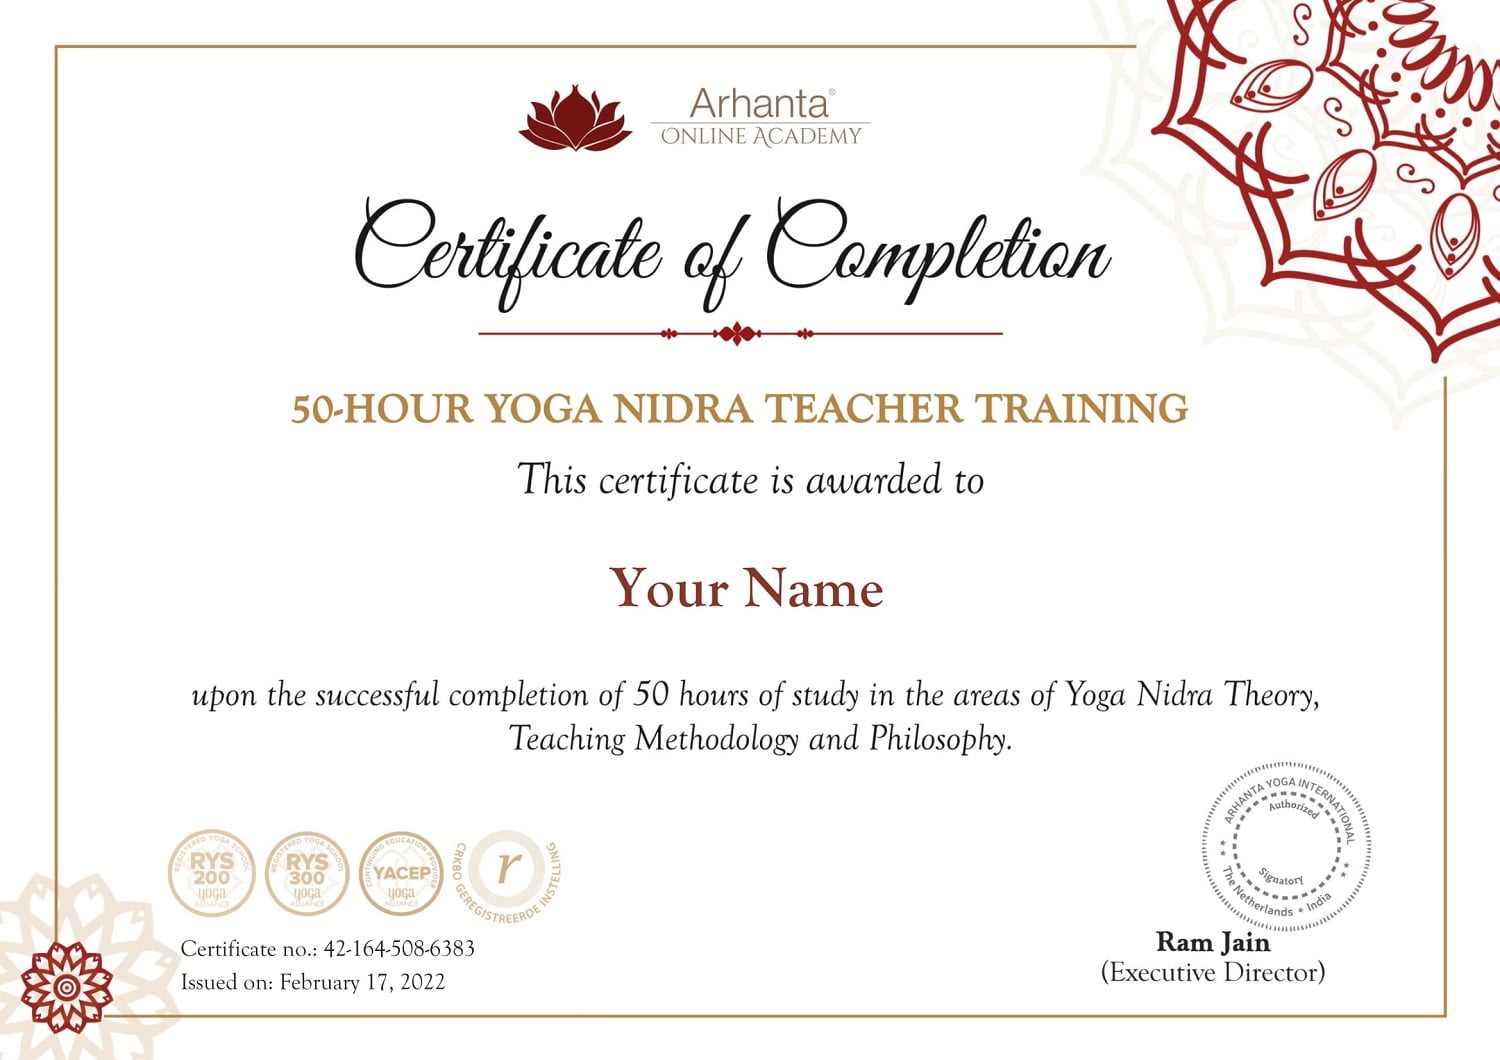 50-Hour Yoga Nidra Teacher Training